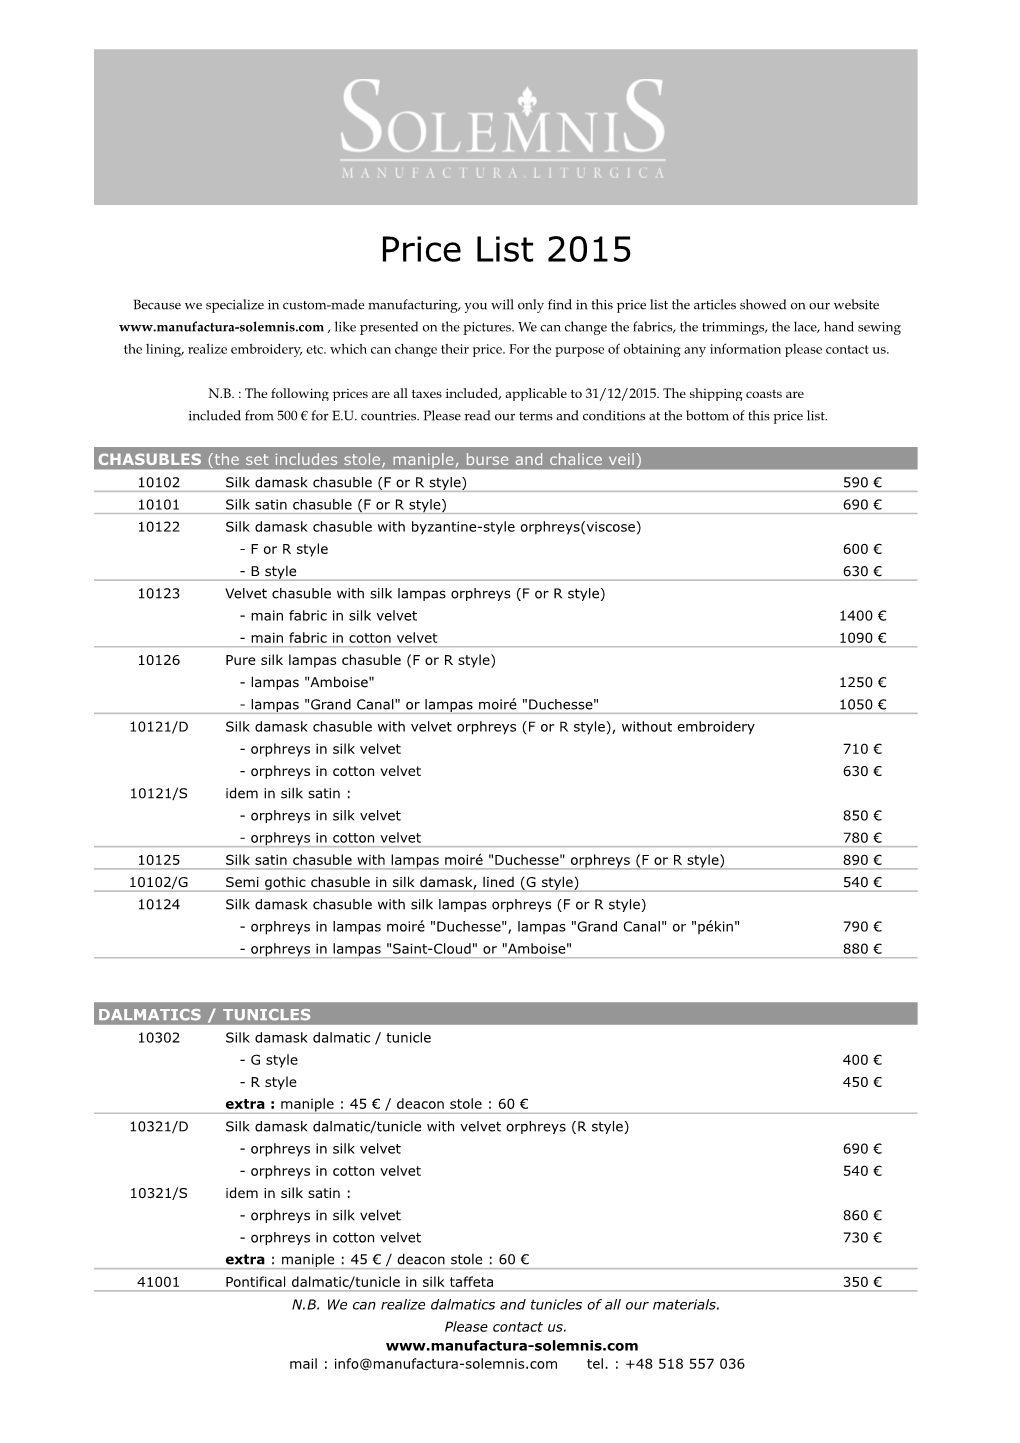 Price List 2015.Xlsx